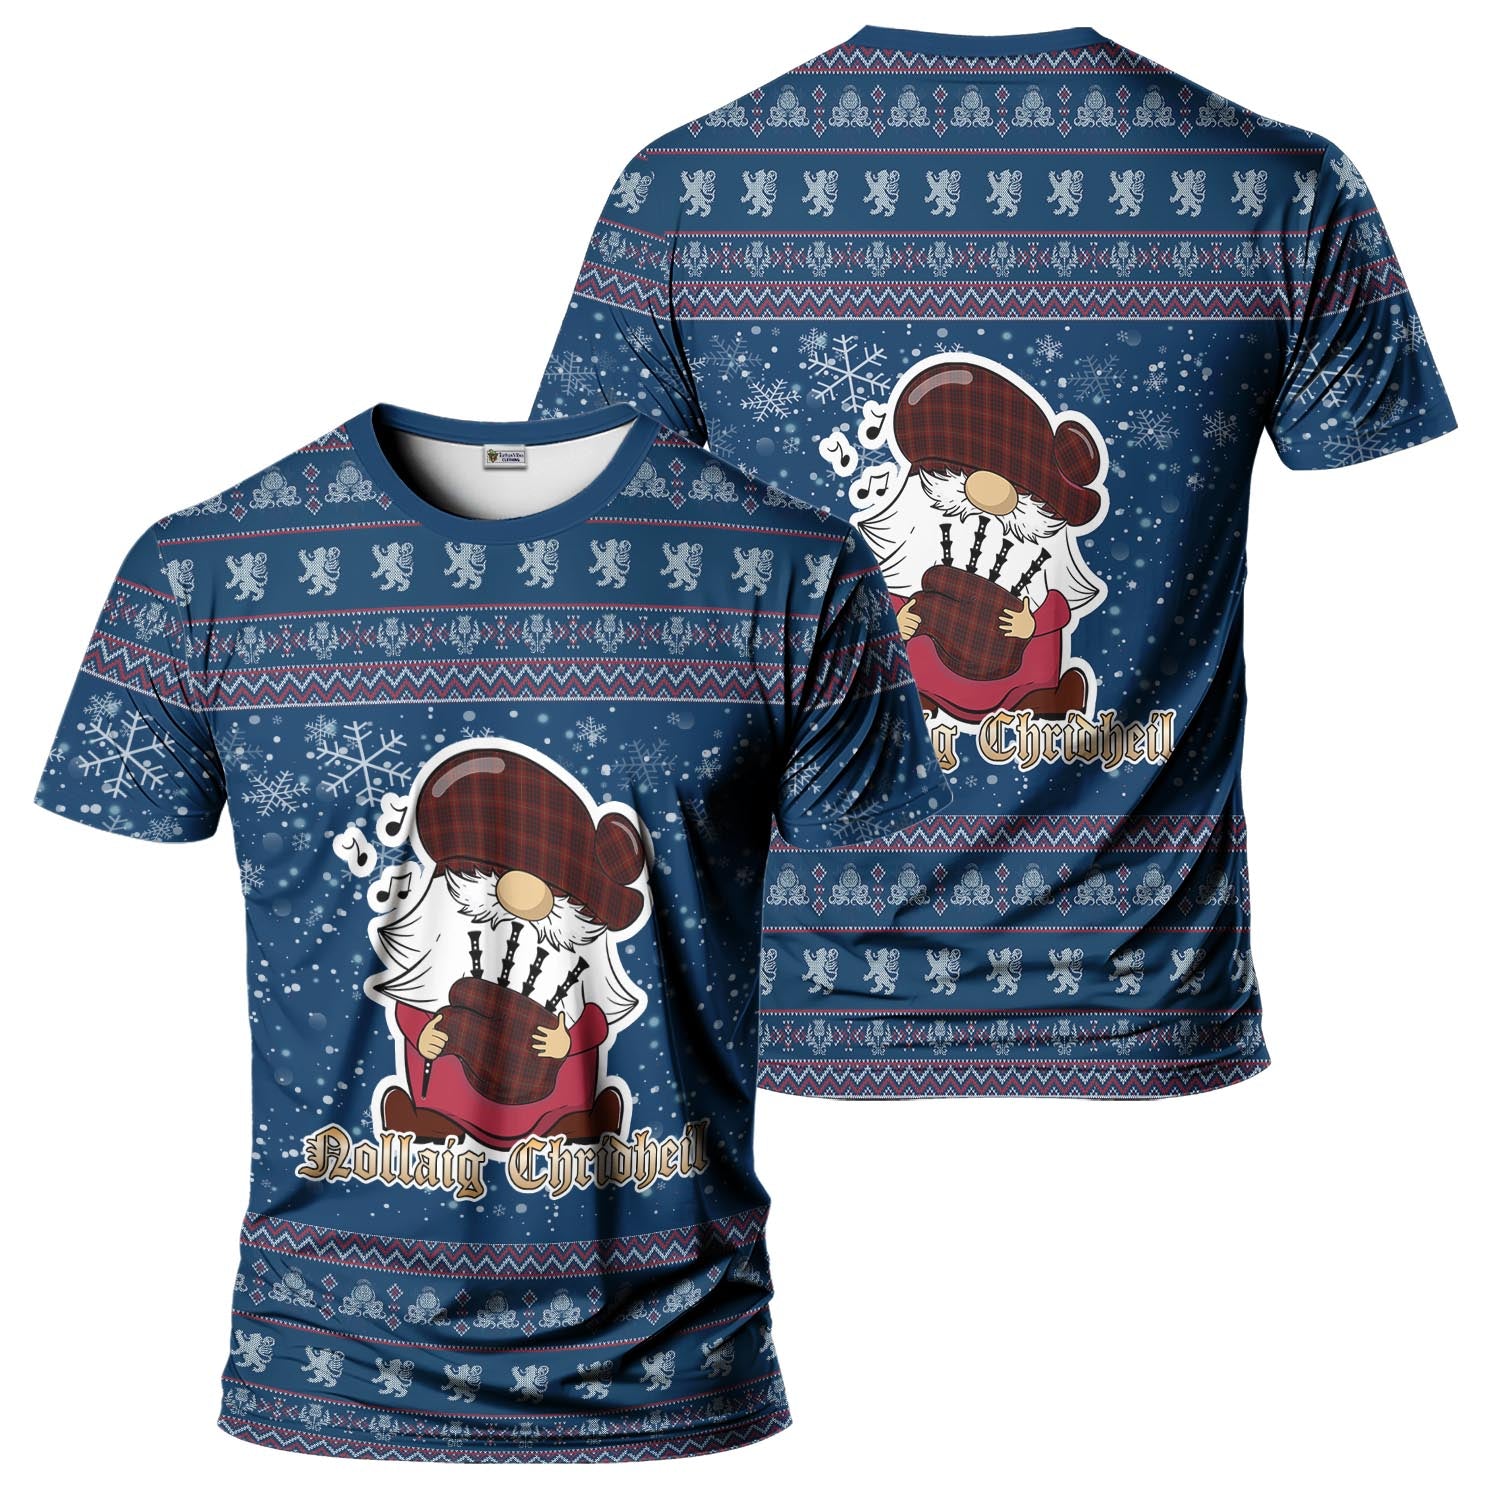 MacIan Clan Christmas Family T-Shirt with Funny Gnome Playing Bagpipes Kid's Shirt Blue - Tartanvibesclothing